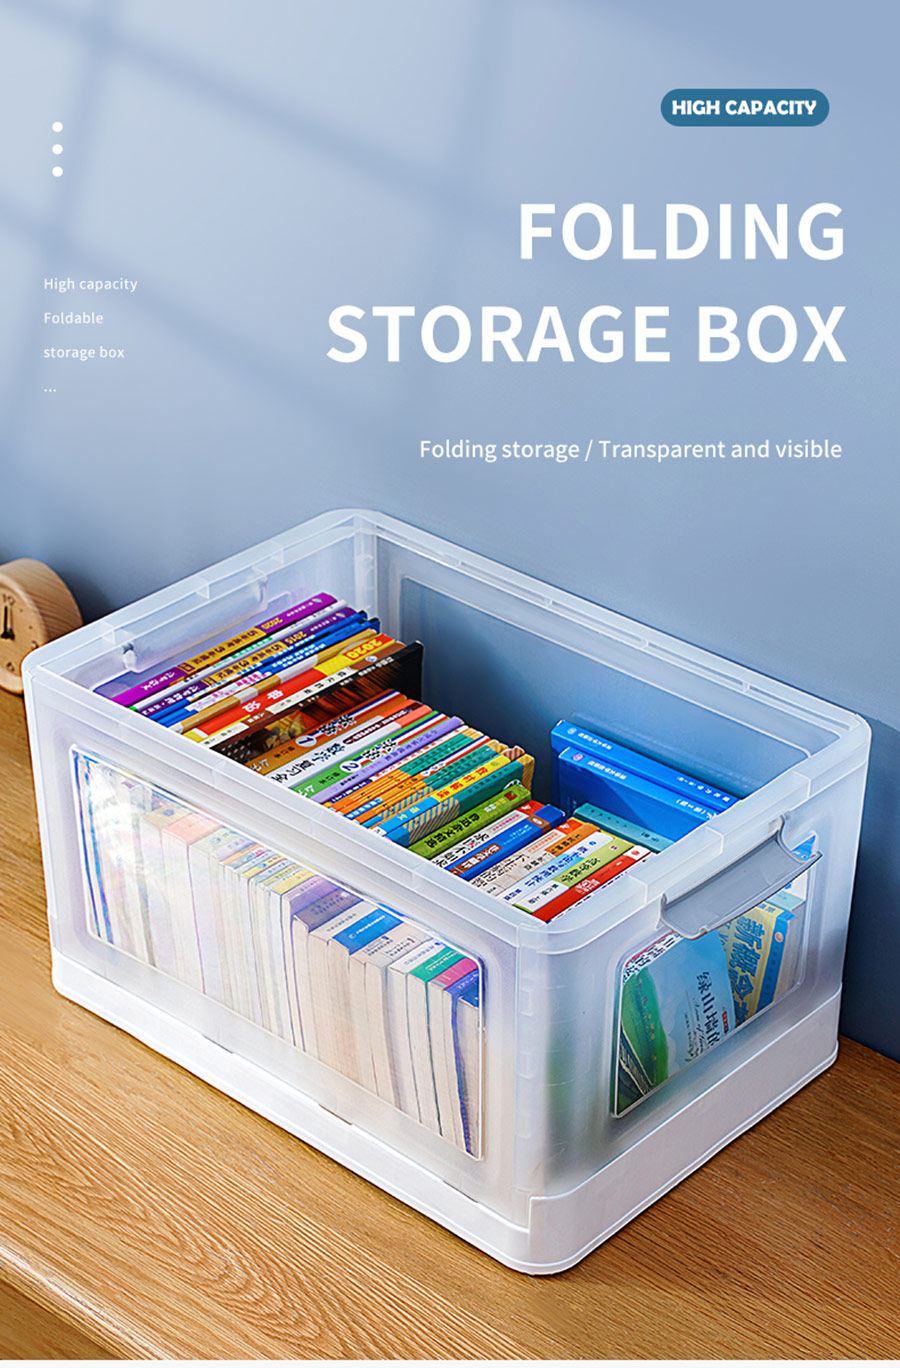 Folding-storage-box-details-(1)